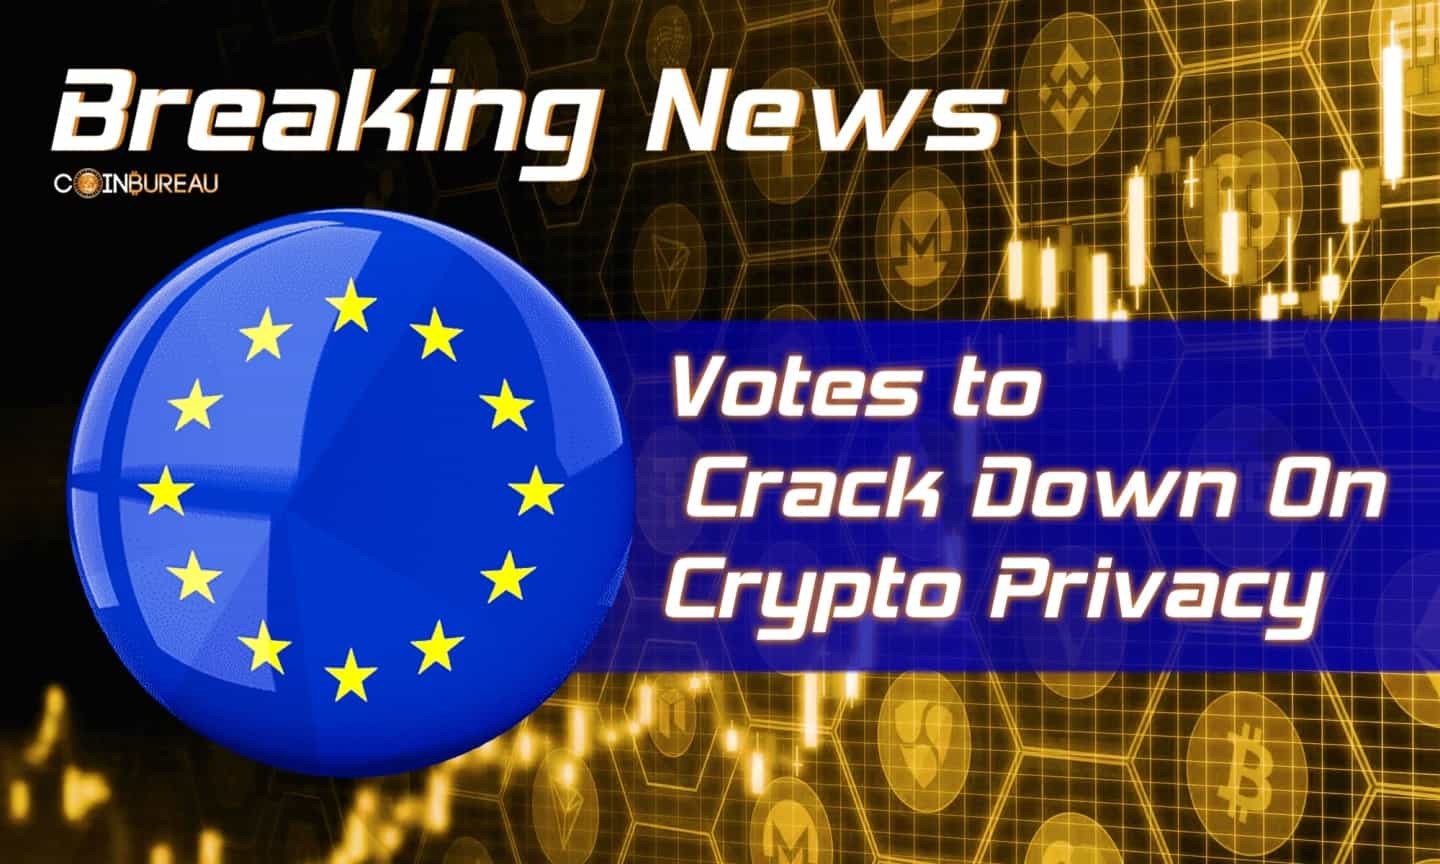 EU Votes to Crack Down On Crypto Privacy